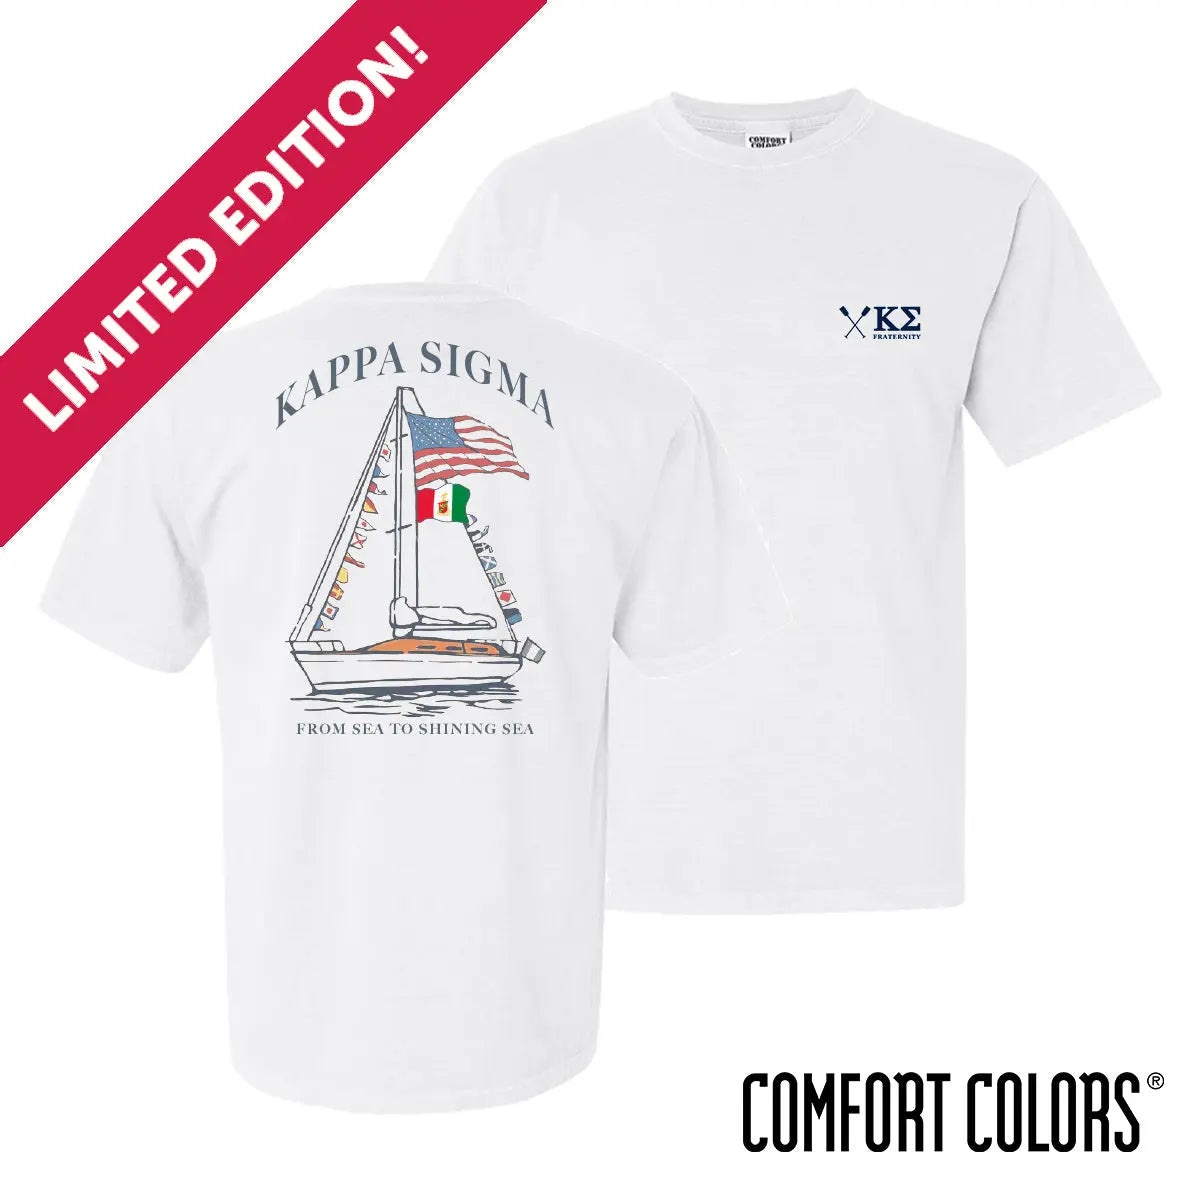 New! Kappa Sig Limited Edition Comfort Colors Nautical Patriot Short Sleeve Tee Kappa Sigma